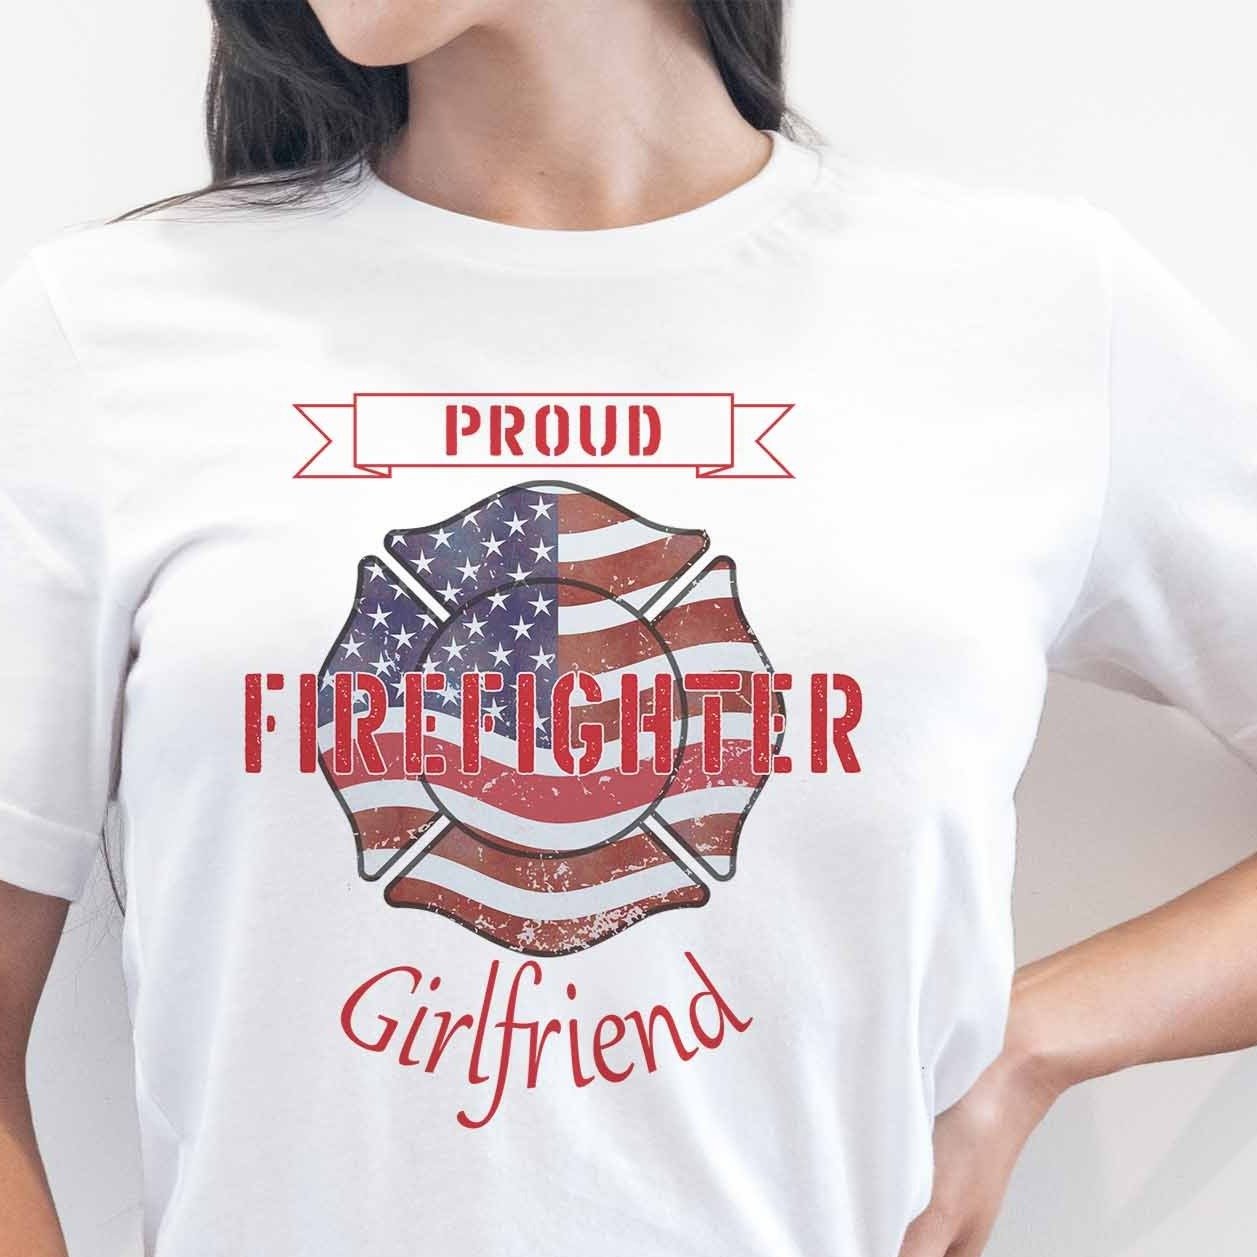 Proud Firefighter Girlfriend - My Custom Tee Party